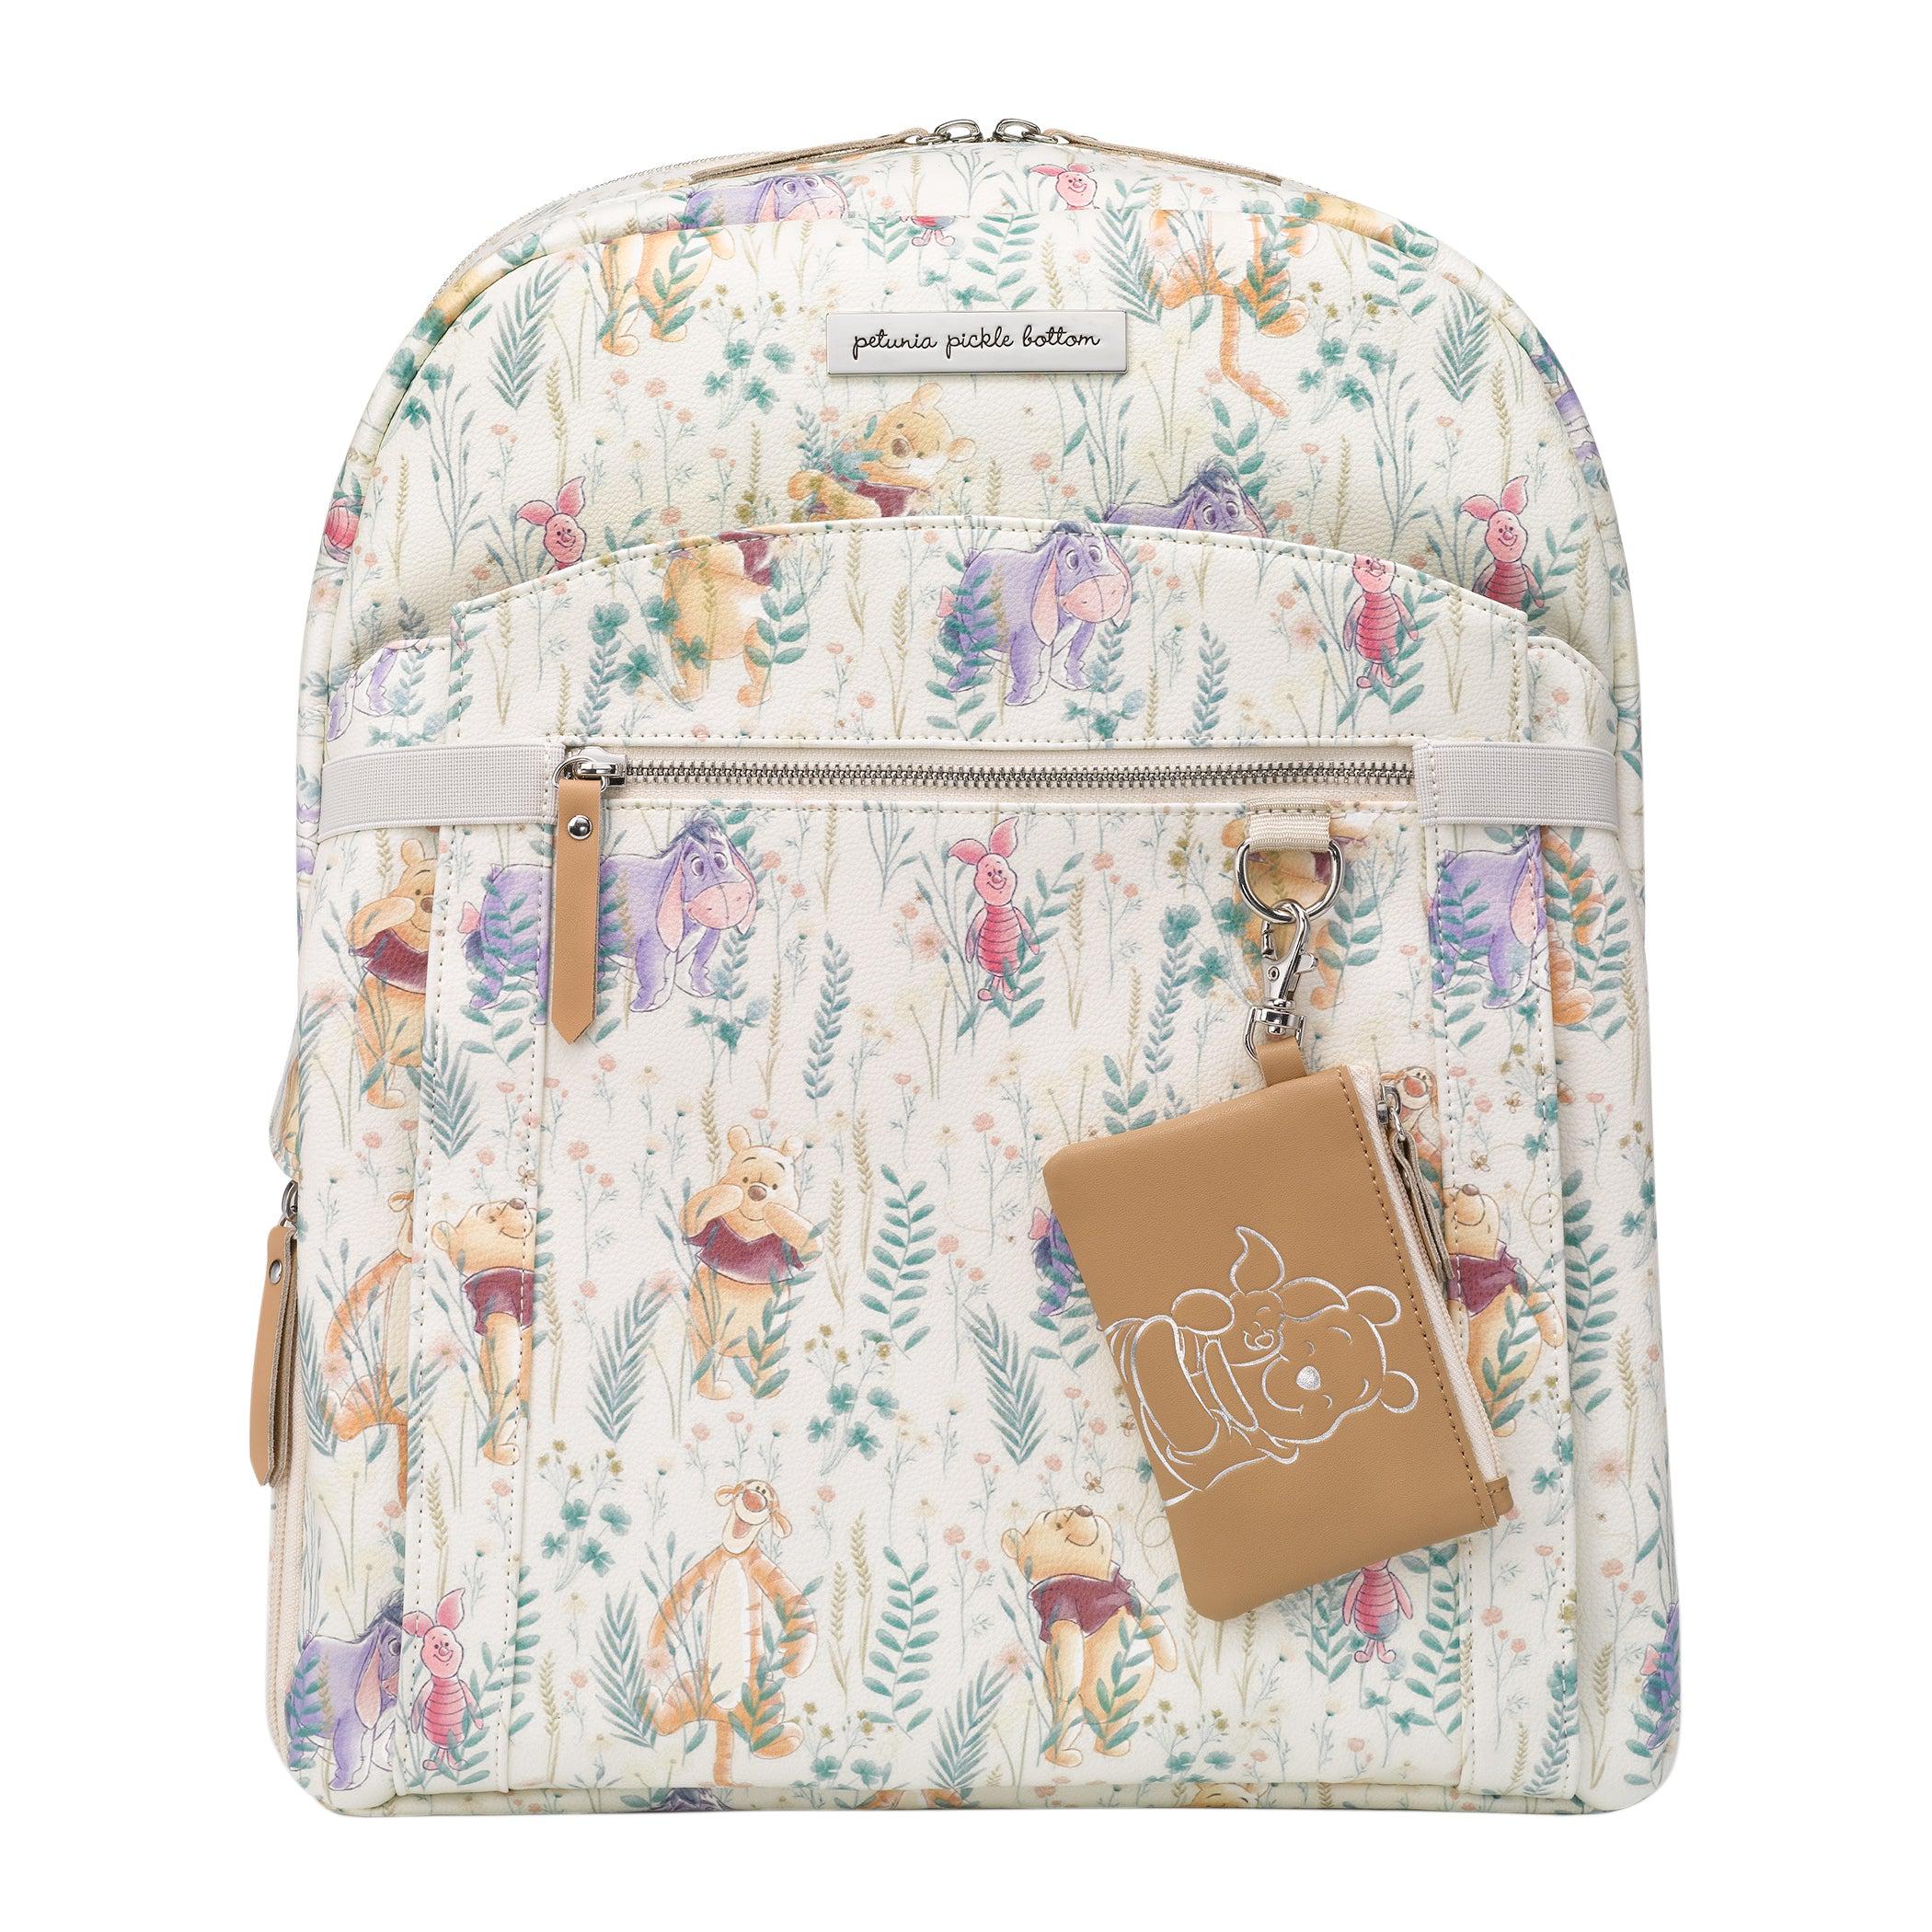 2-in-1 Provisions Breast & Diaper Bag Backpack Disney's Winnie – Pickle Bottom